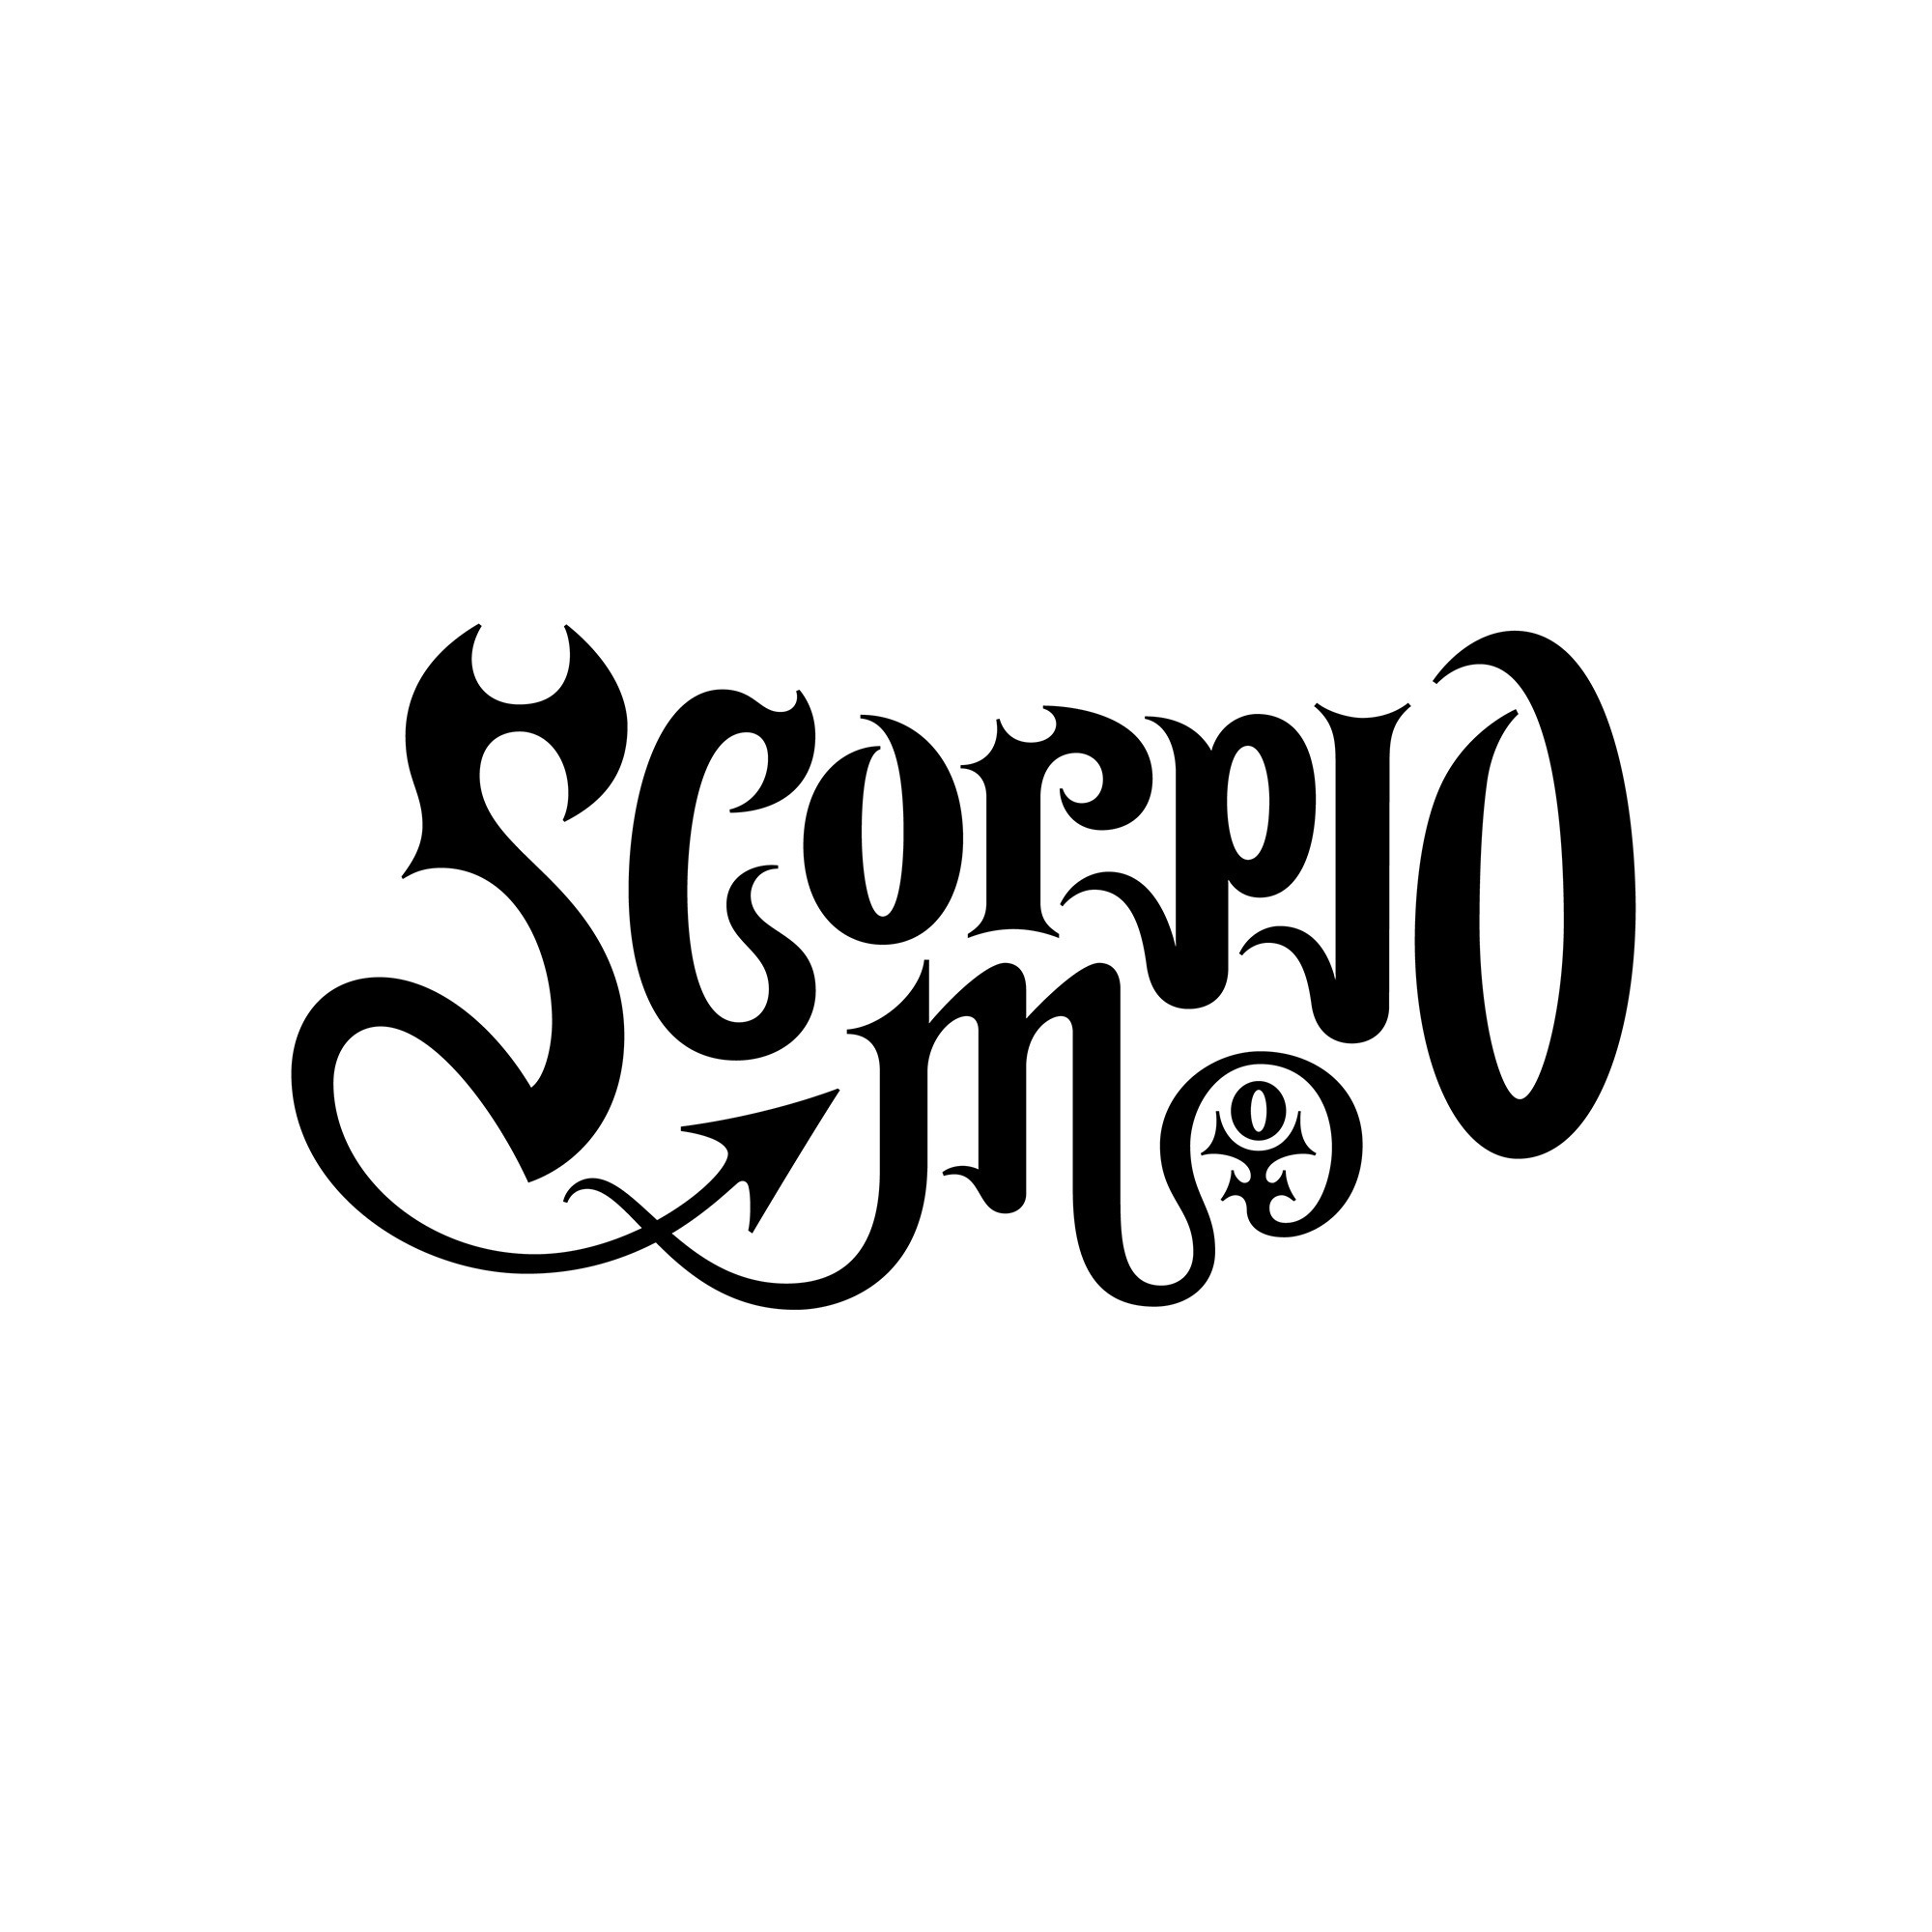 Scorpio tattoo | Tatoeage inspiratie, Tatoeage ideeën, Tatoeage